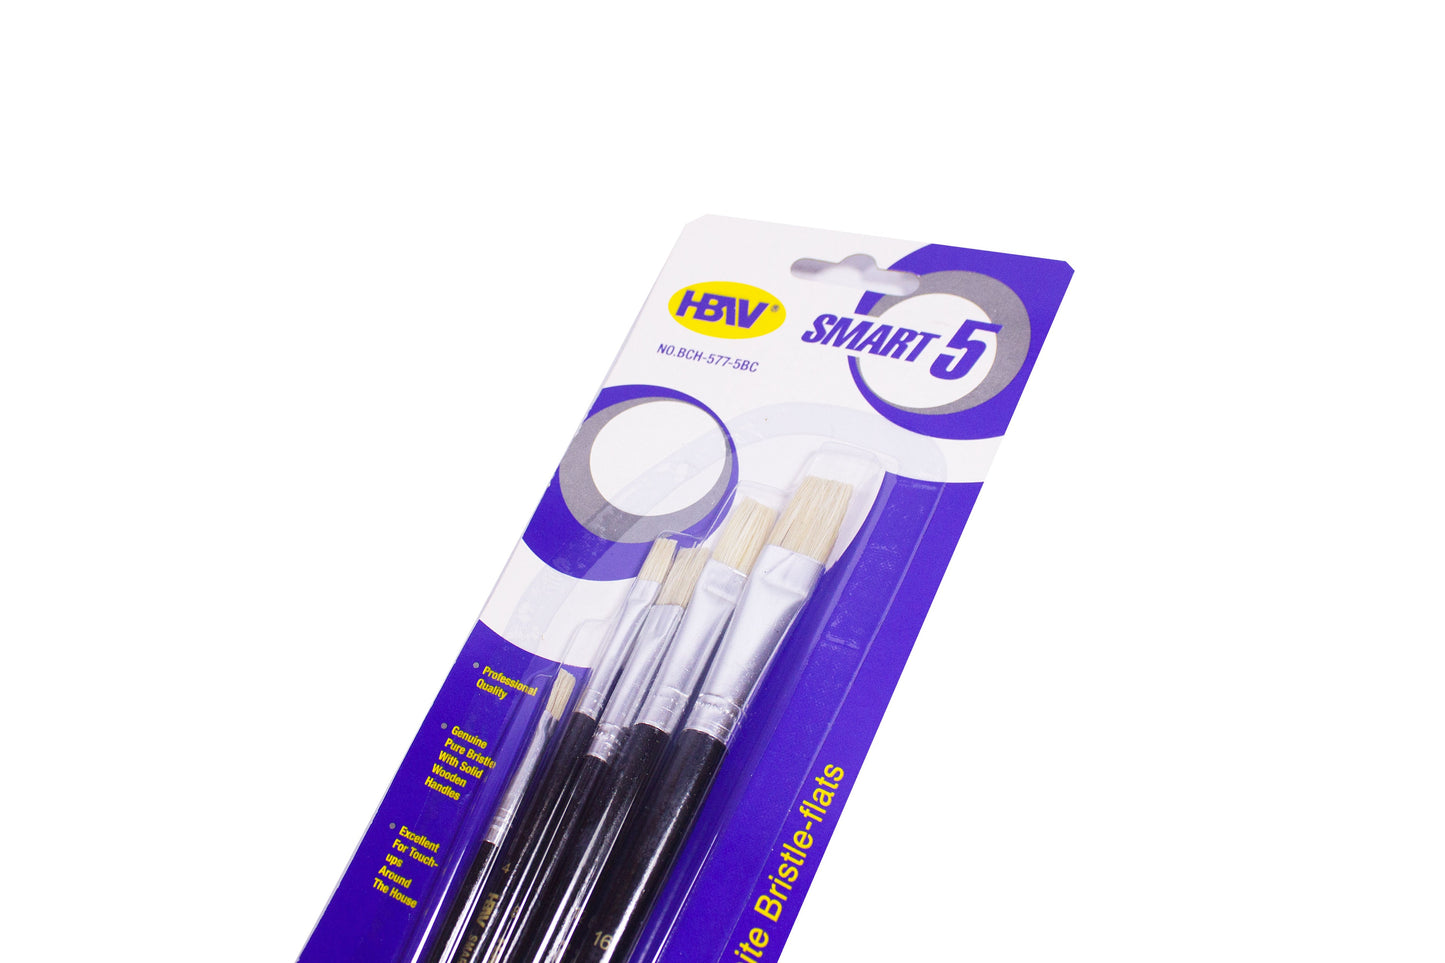 HBW Flat Paint Brush BCH-577-5BC 5s